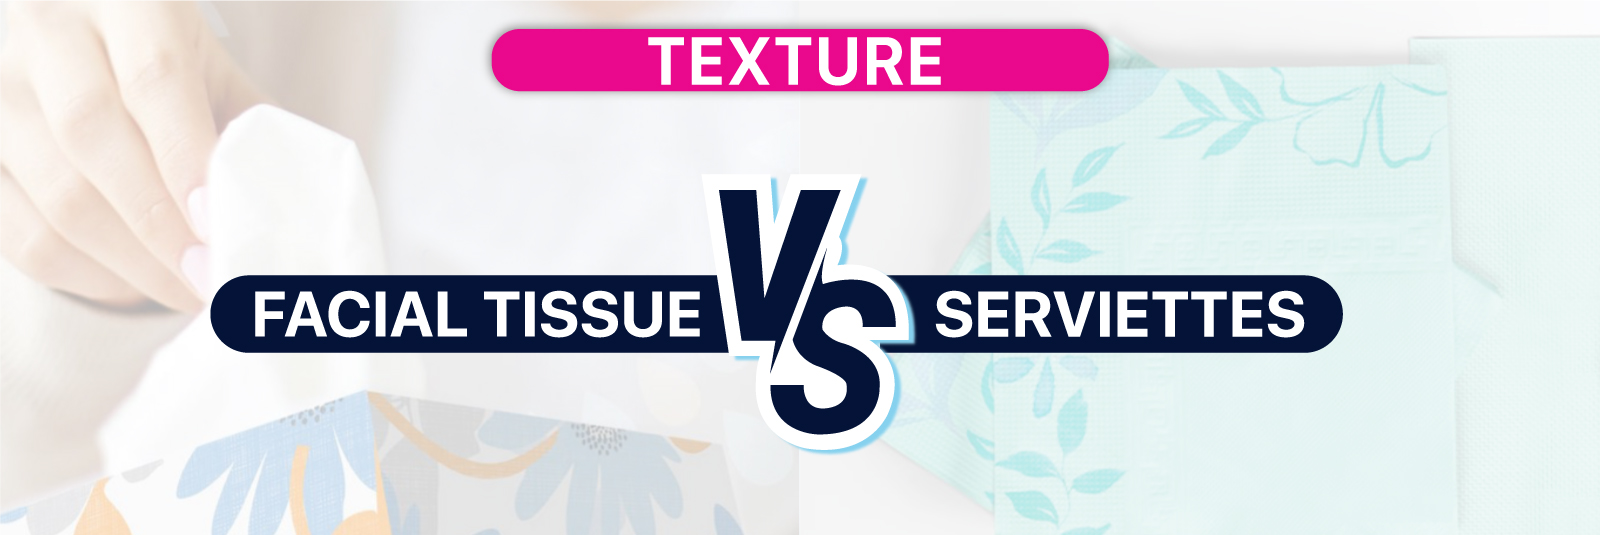 texture facial tissue vs serviettes